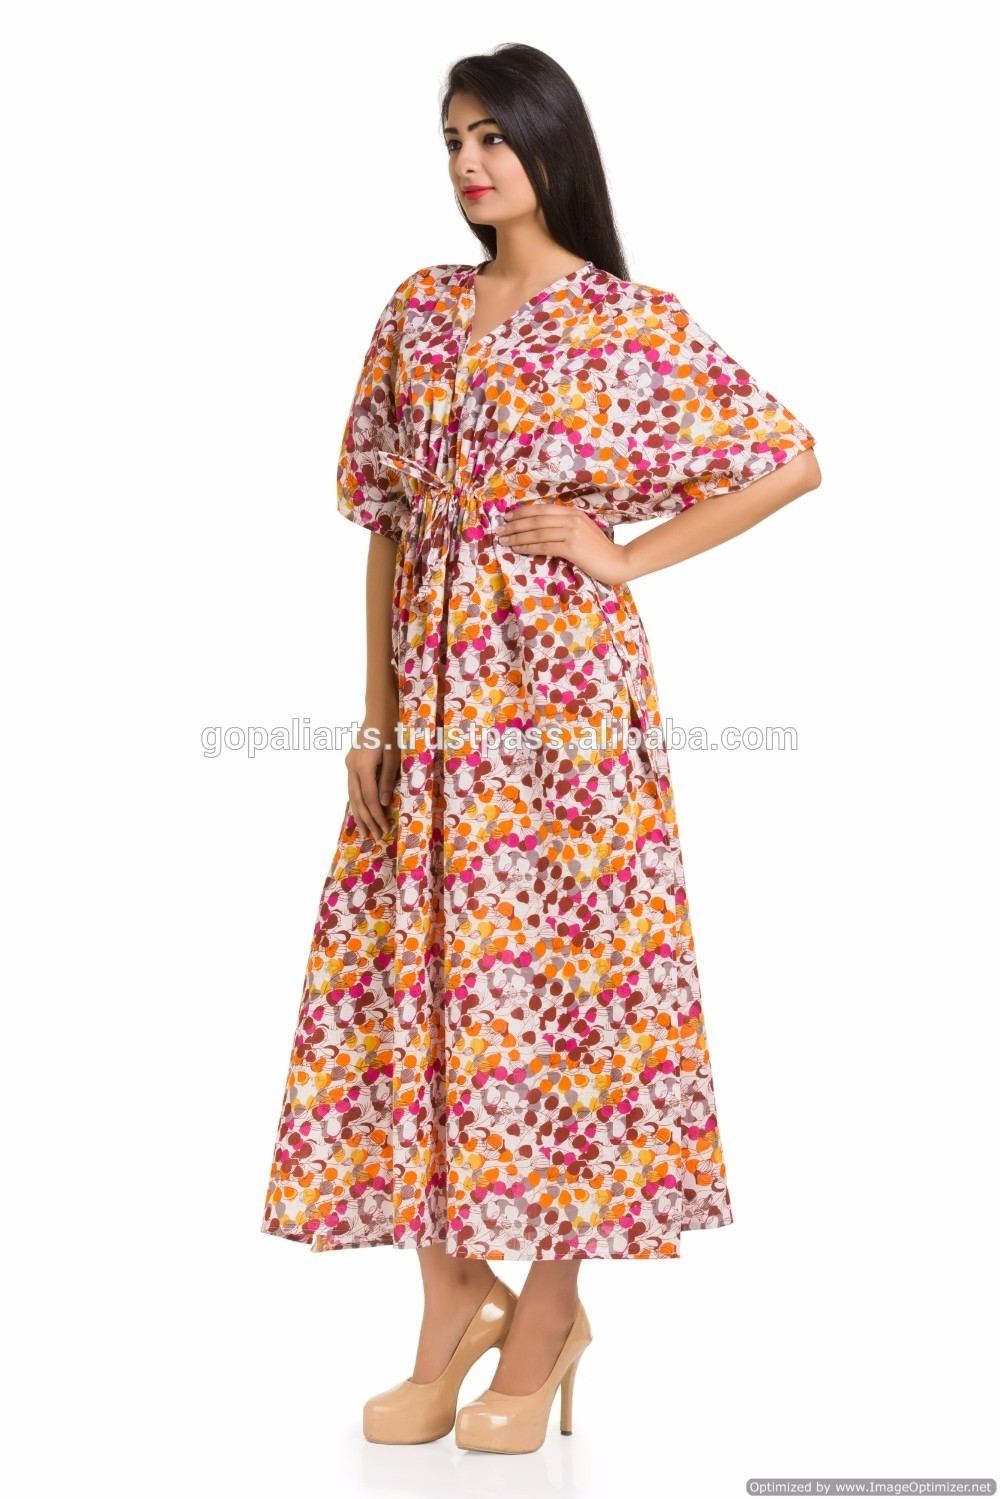 DAY GOWN / KIMONO / BATH ROBE / COVER UP #bathrobe #kimono #gown #daygown # floral #flowers #dress #casual #indian #cotton #100%cotton #fullsleeve